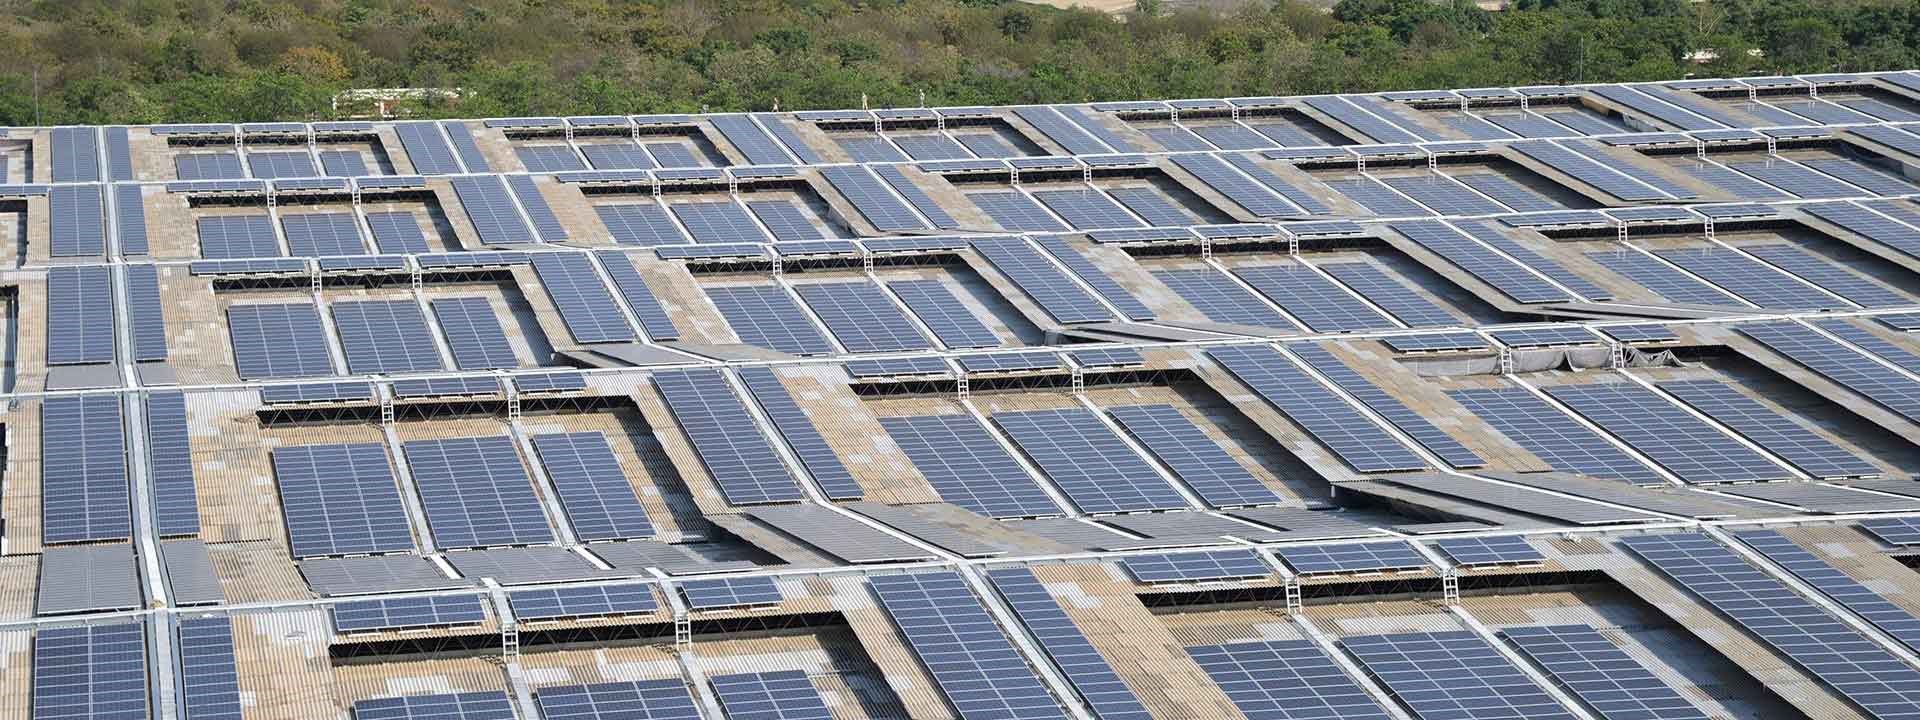 Solar Tracker Plant in Paniyur- L&T Construction